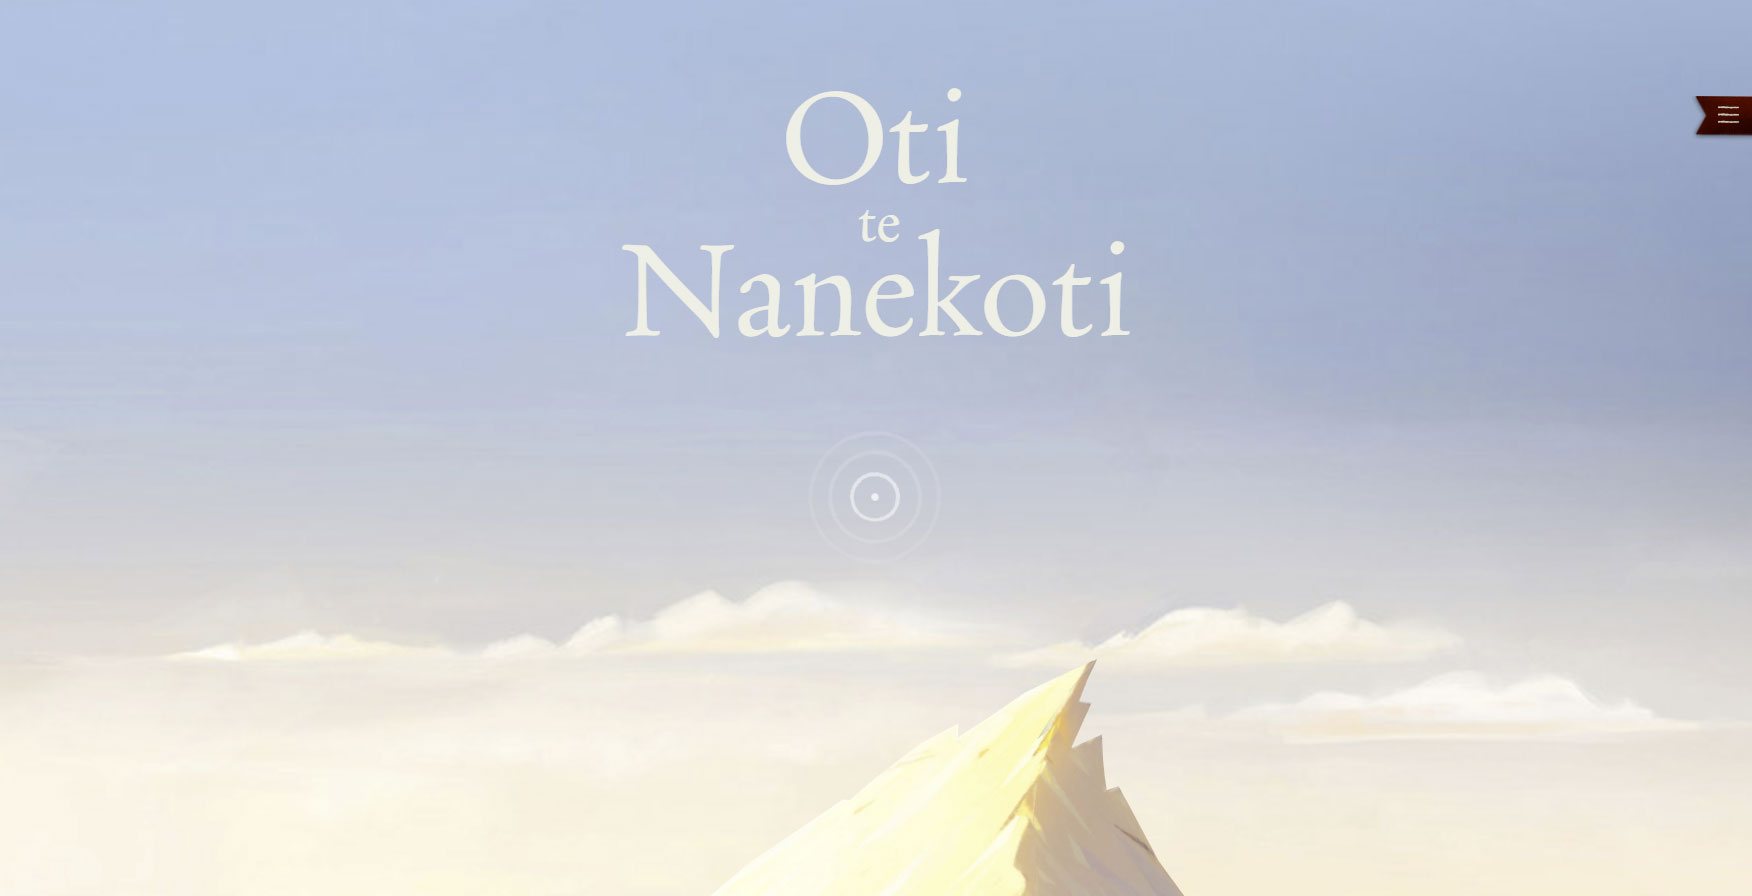 Title screen for Oti te Nanekoti, the Māori version